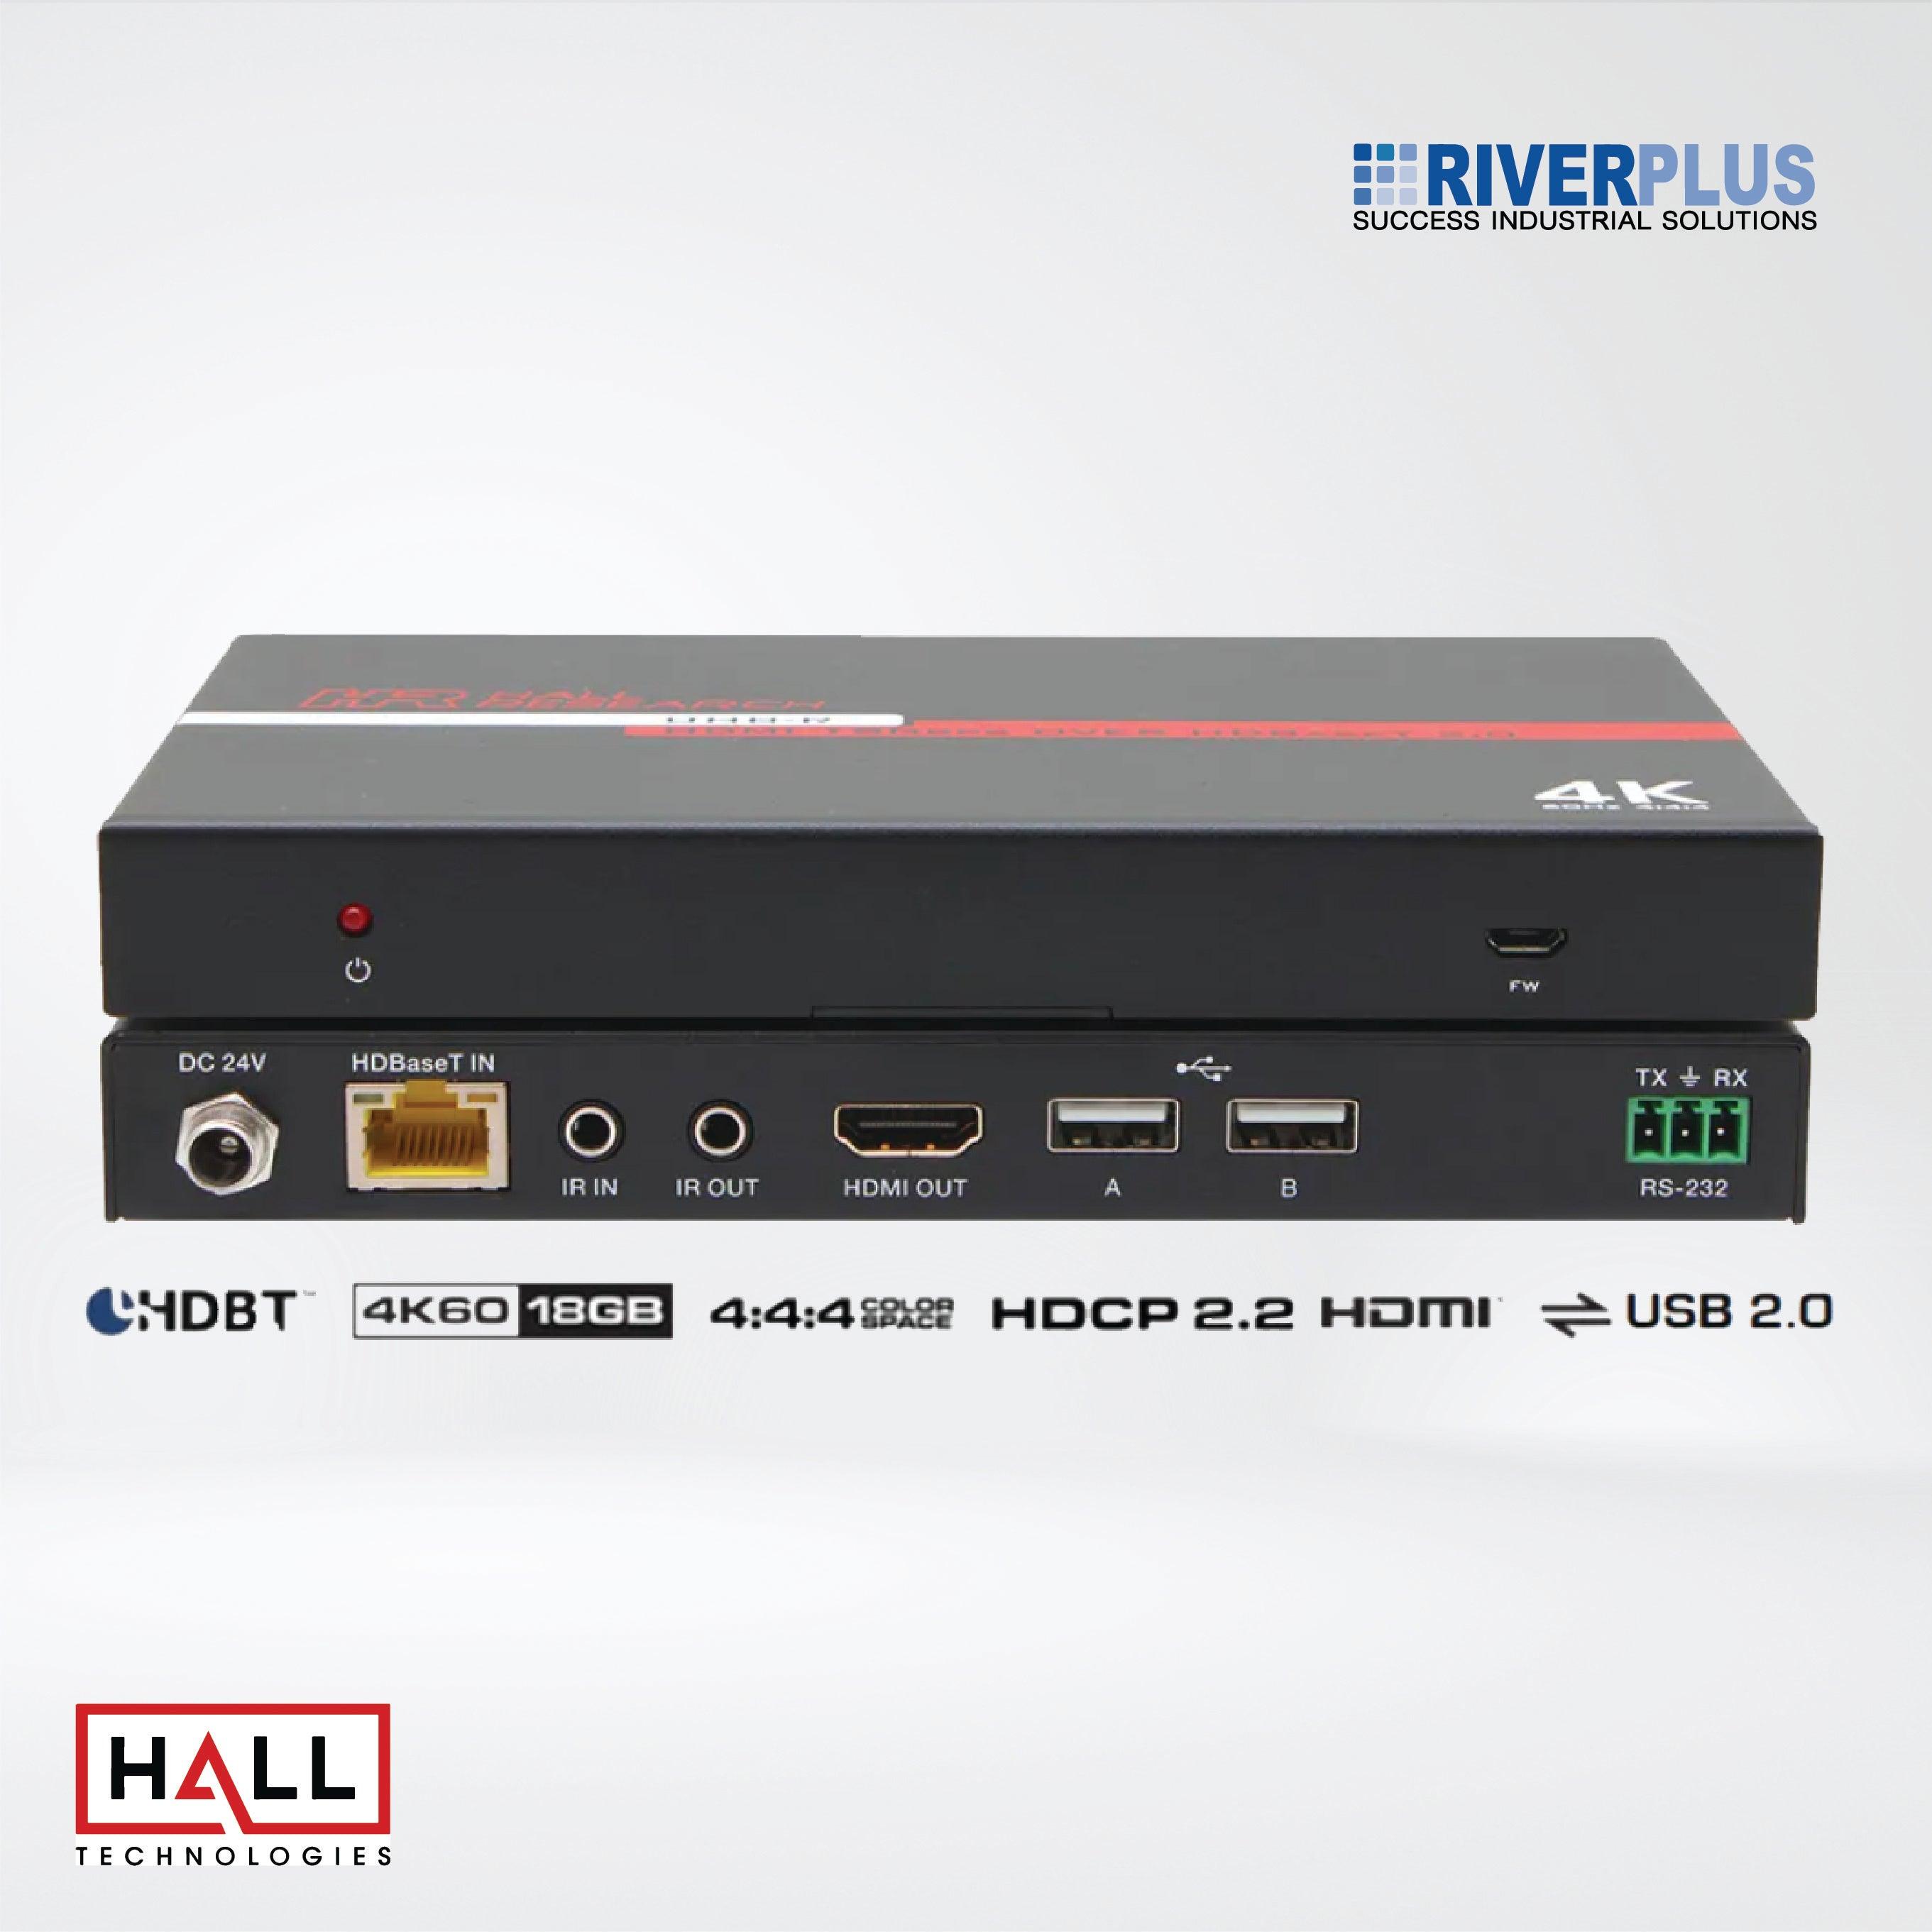 EX-4KU (Kit) USB & 4K HDMI with HDBaseT 2.0 Extension on a Single Gang Wall-Plate - Riverplus